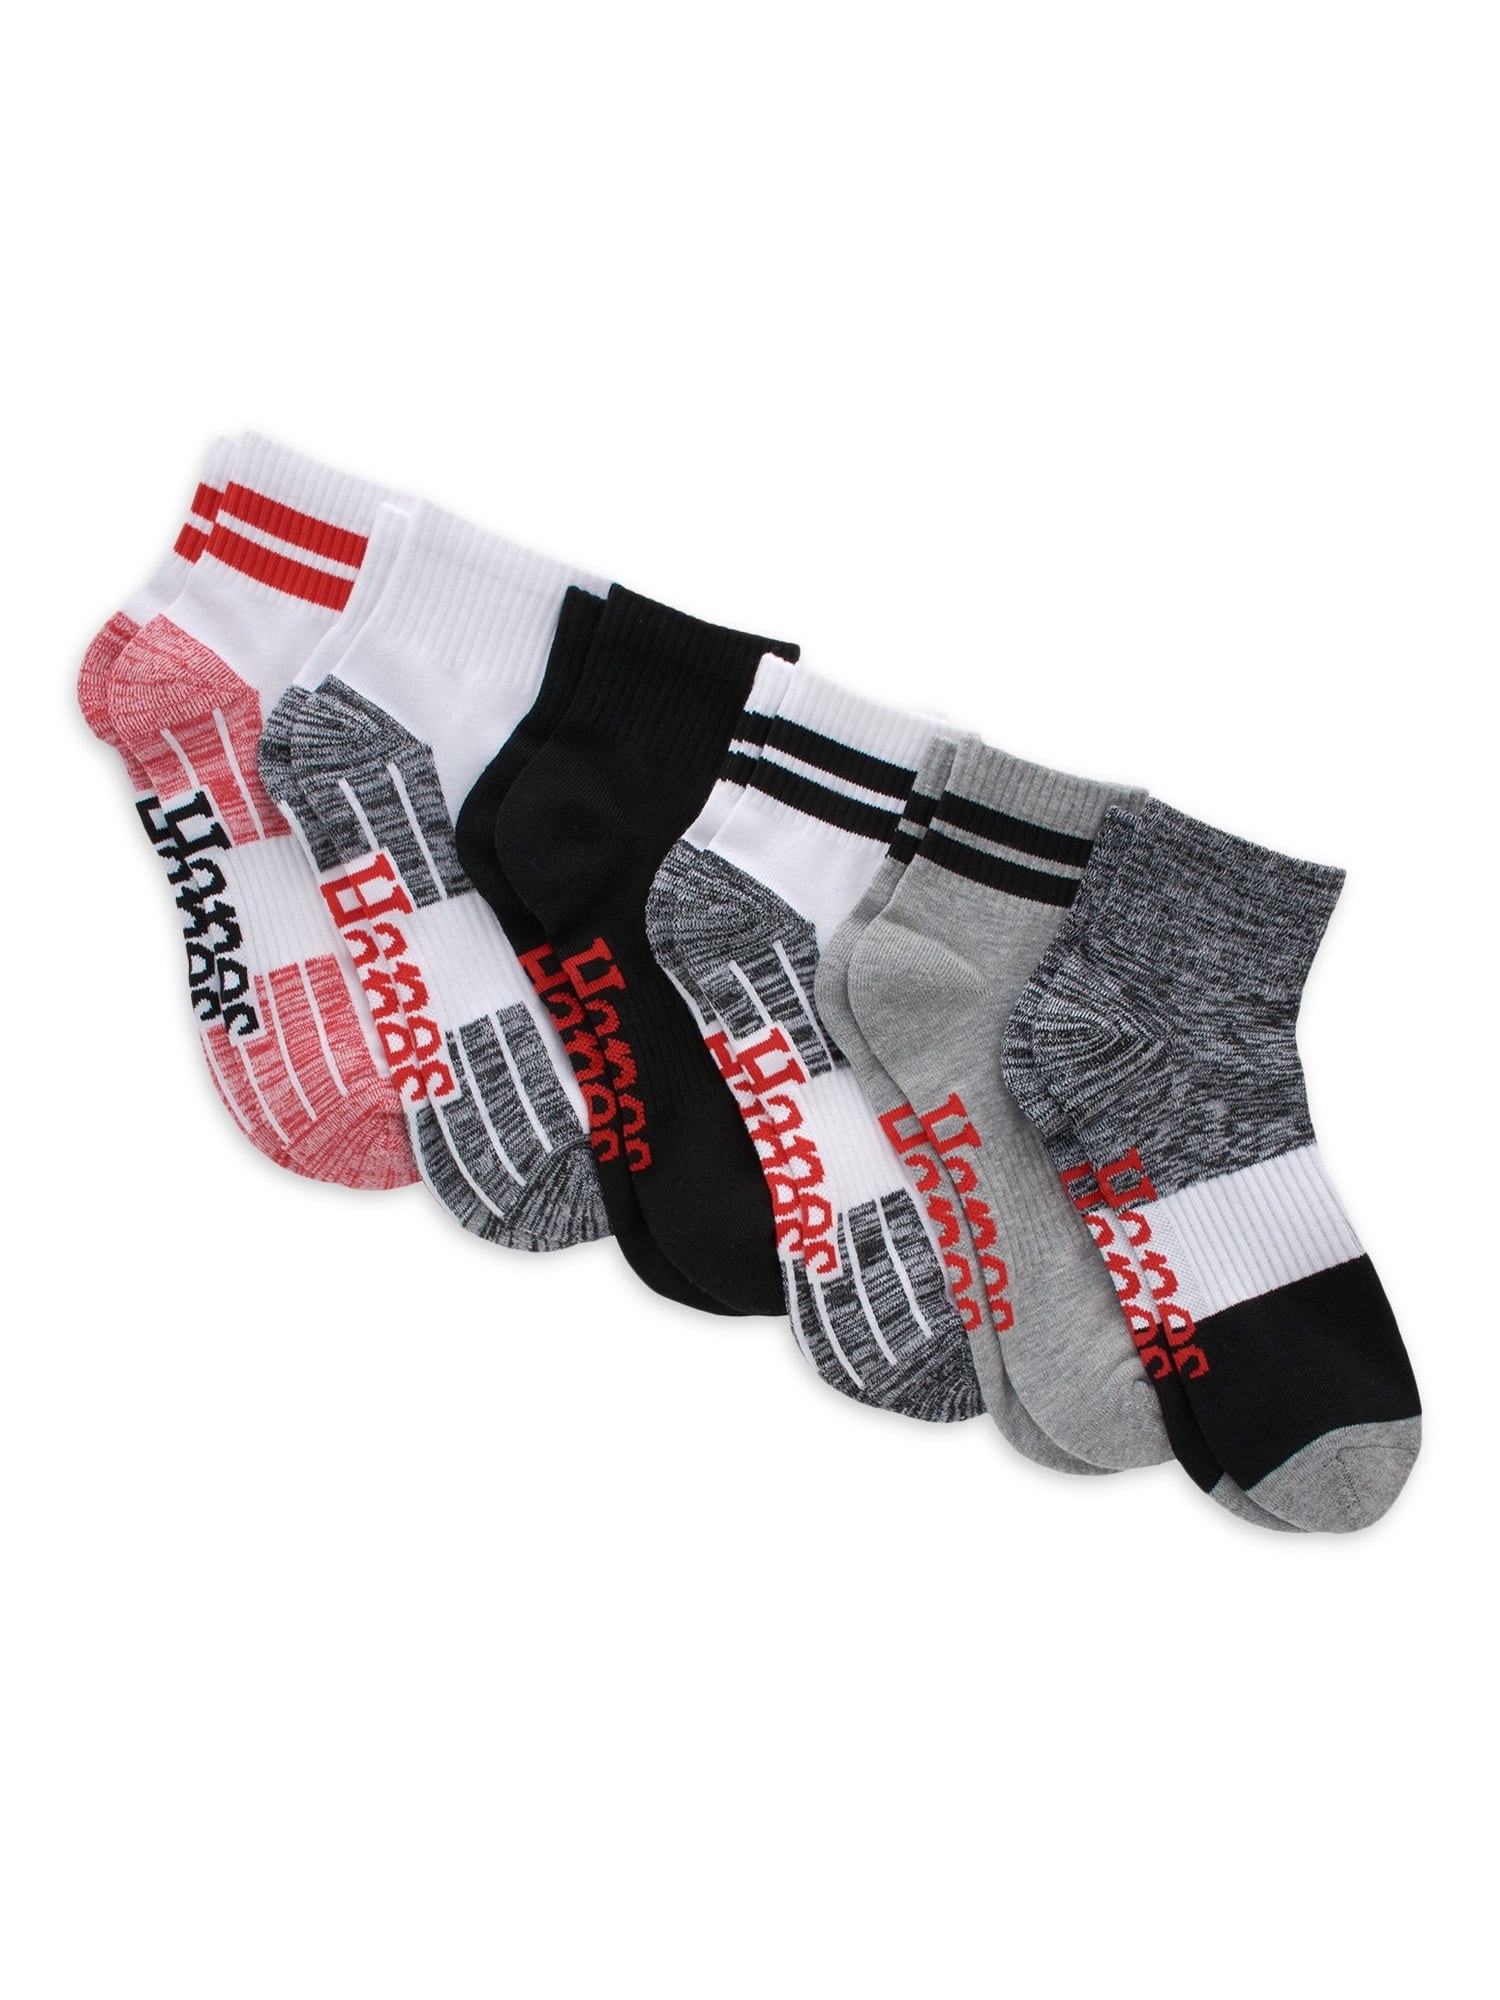 Hanes Originals Men's Ankle Socks, Moisture Wicking, 6-Pair Pack ...